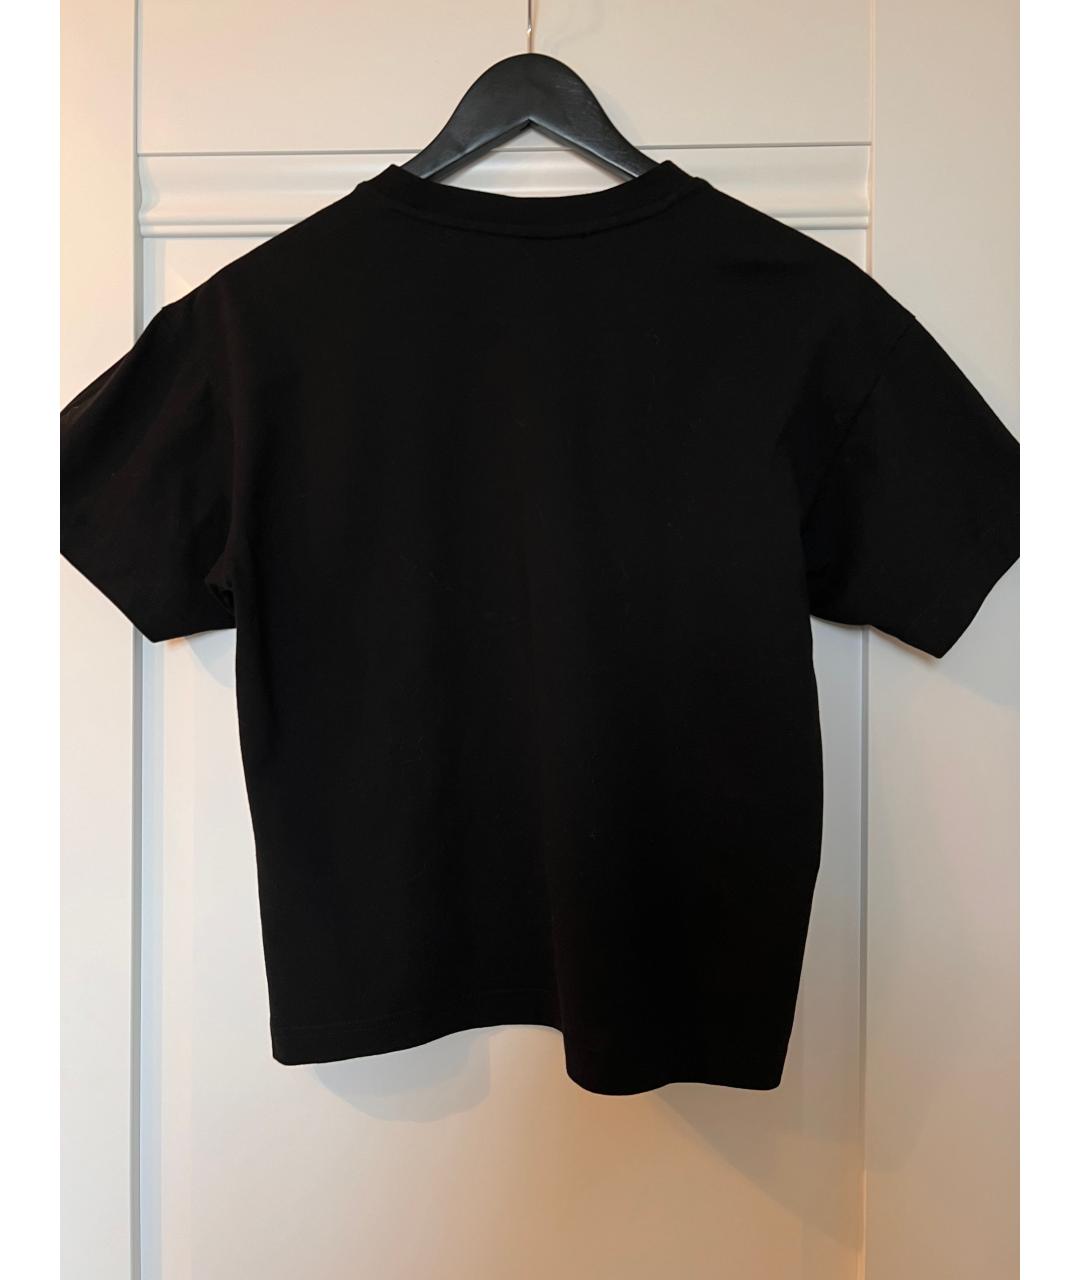 KARL LAGERFELD Черная футболка, фото 2